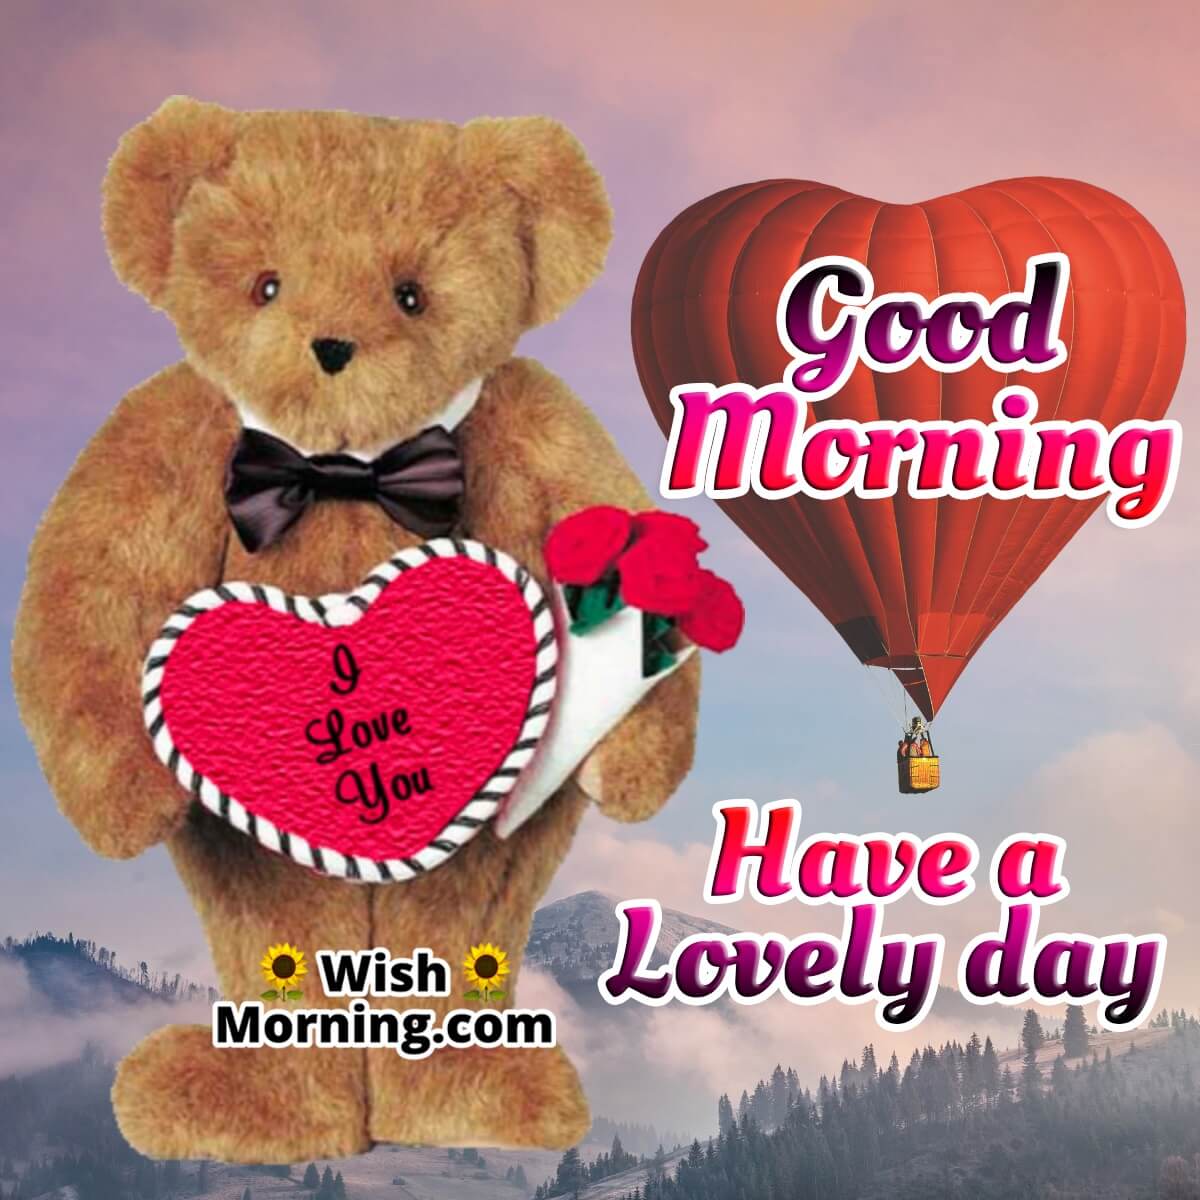 Cute Good Morning Teddy Bear Image